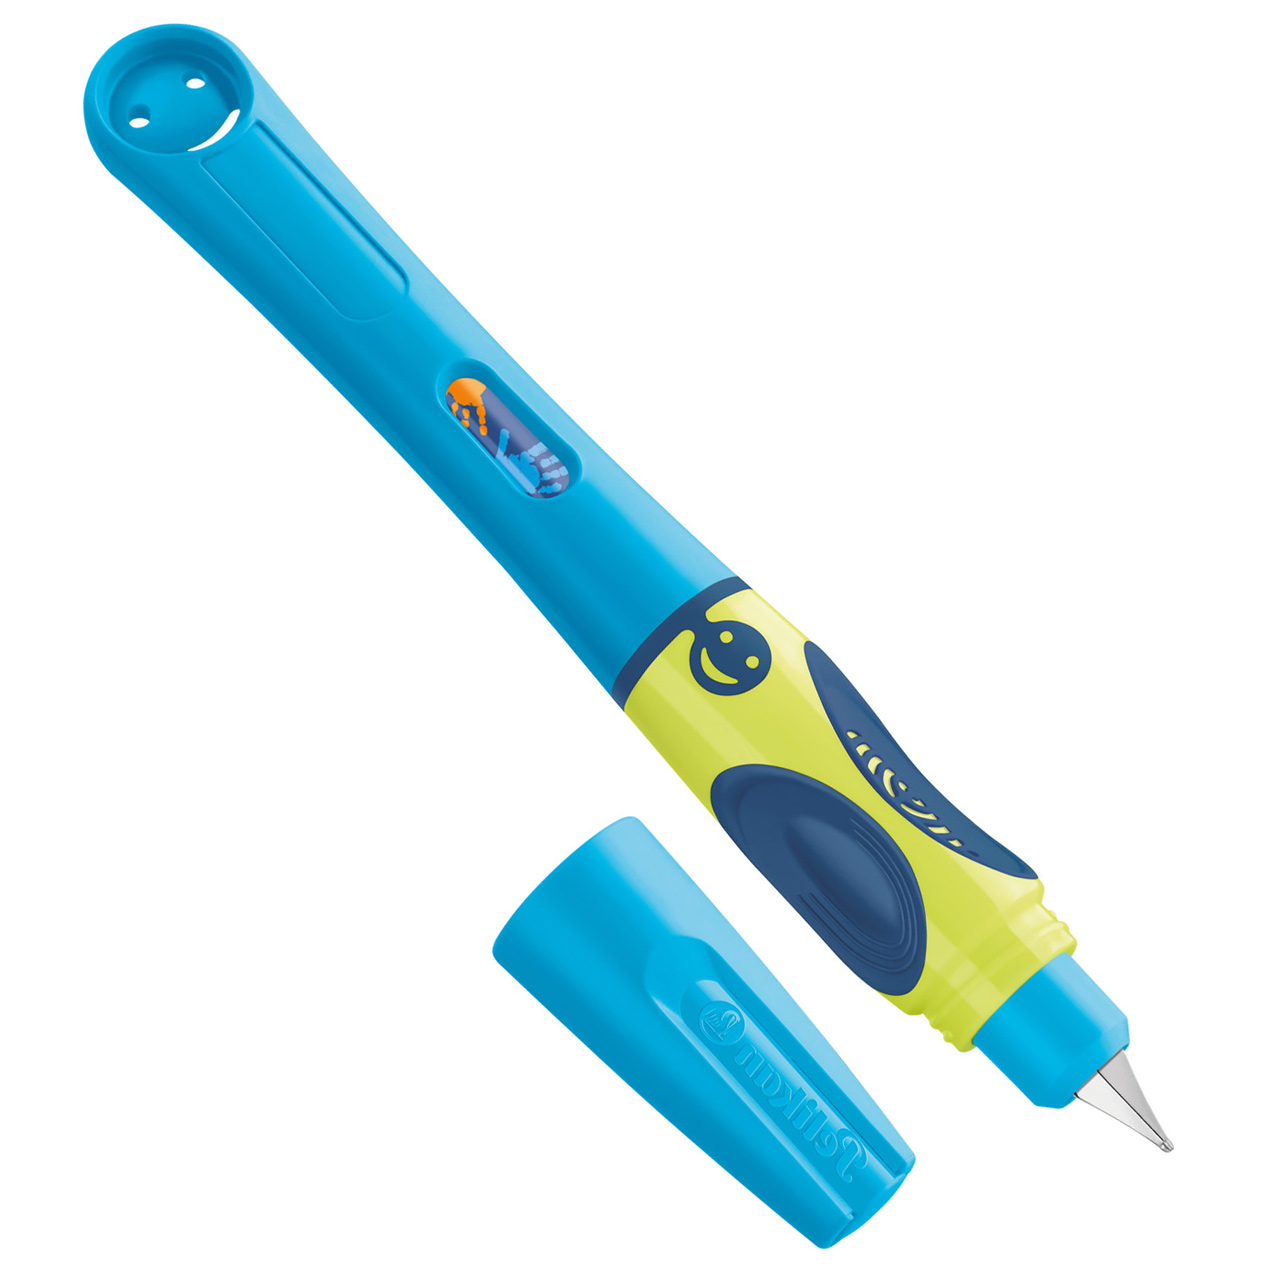 Pelikan-Griffix-fueller-820370-Neon-fresh-blue-blau-gruen-Linkshaender-schreiblernfueller-lafueliki